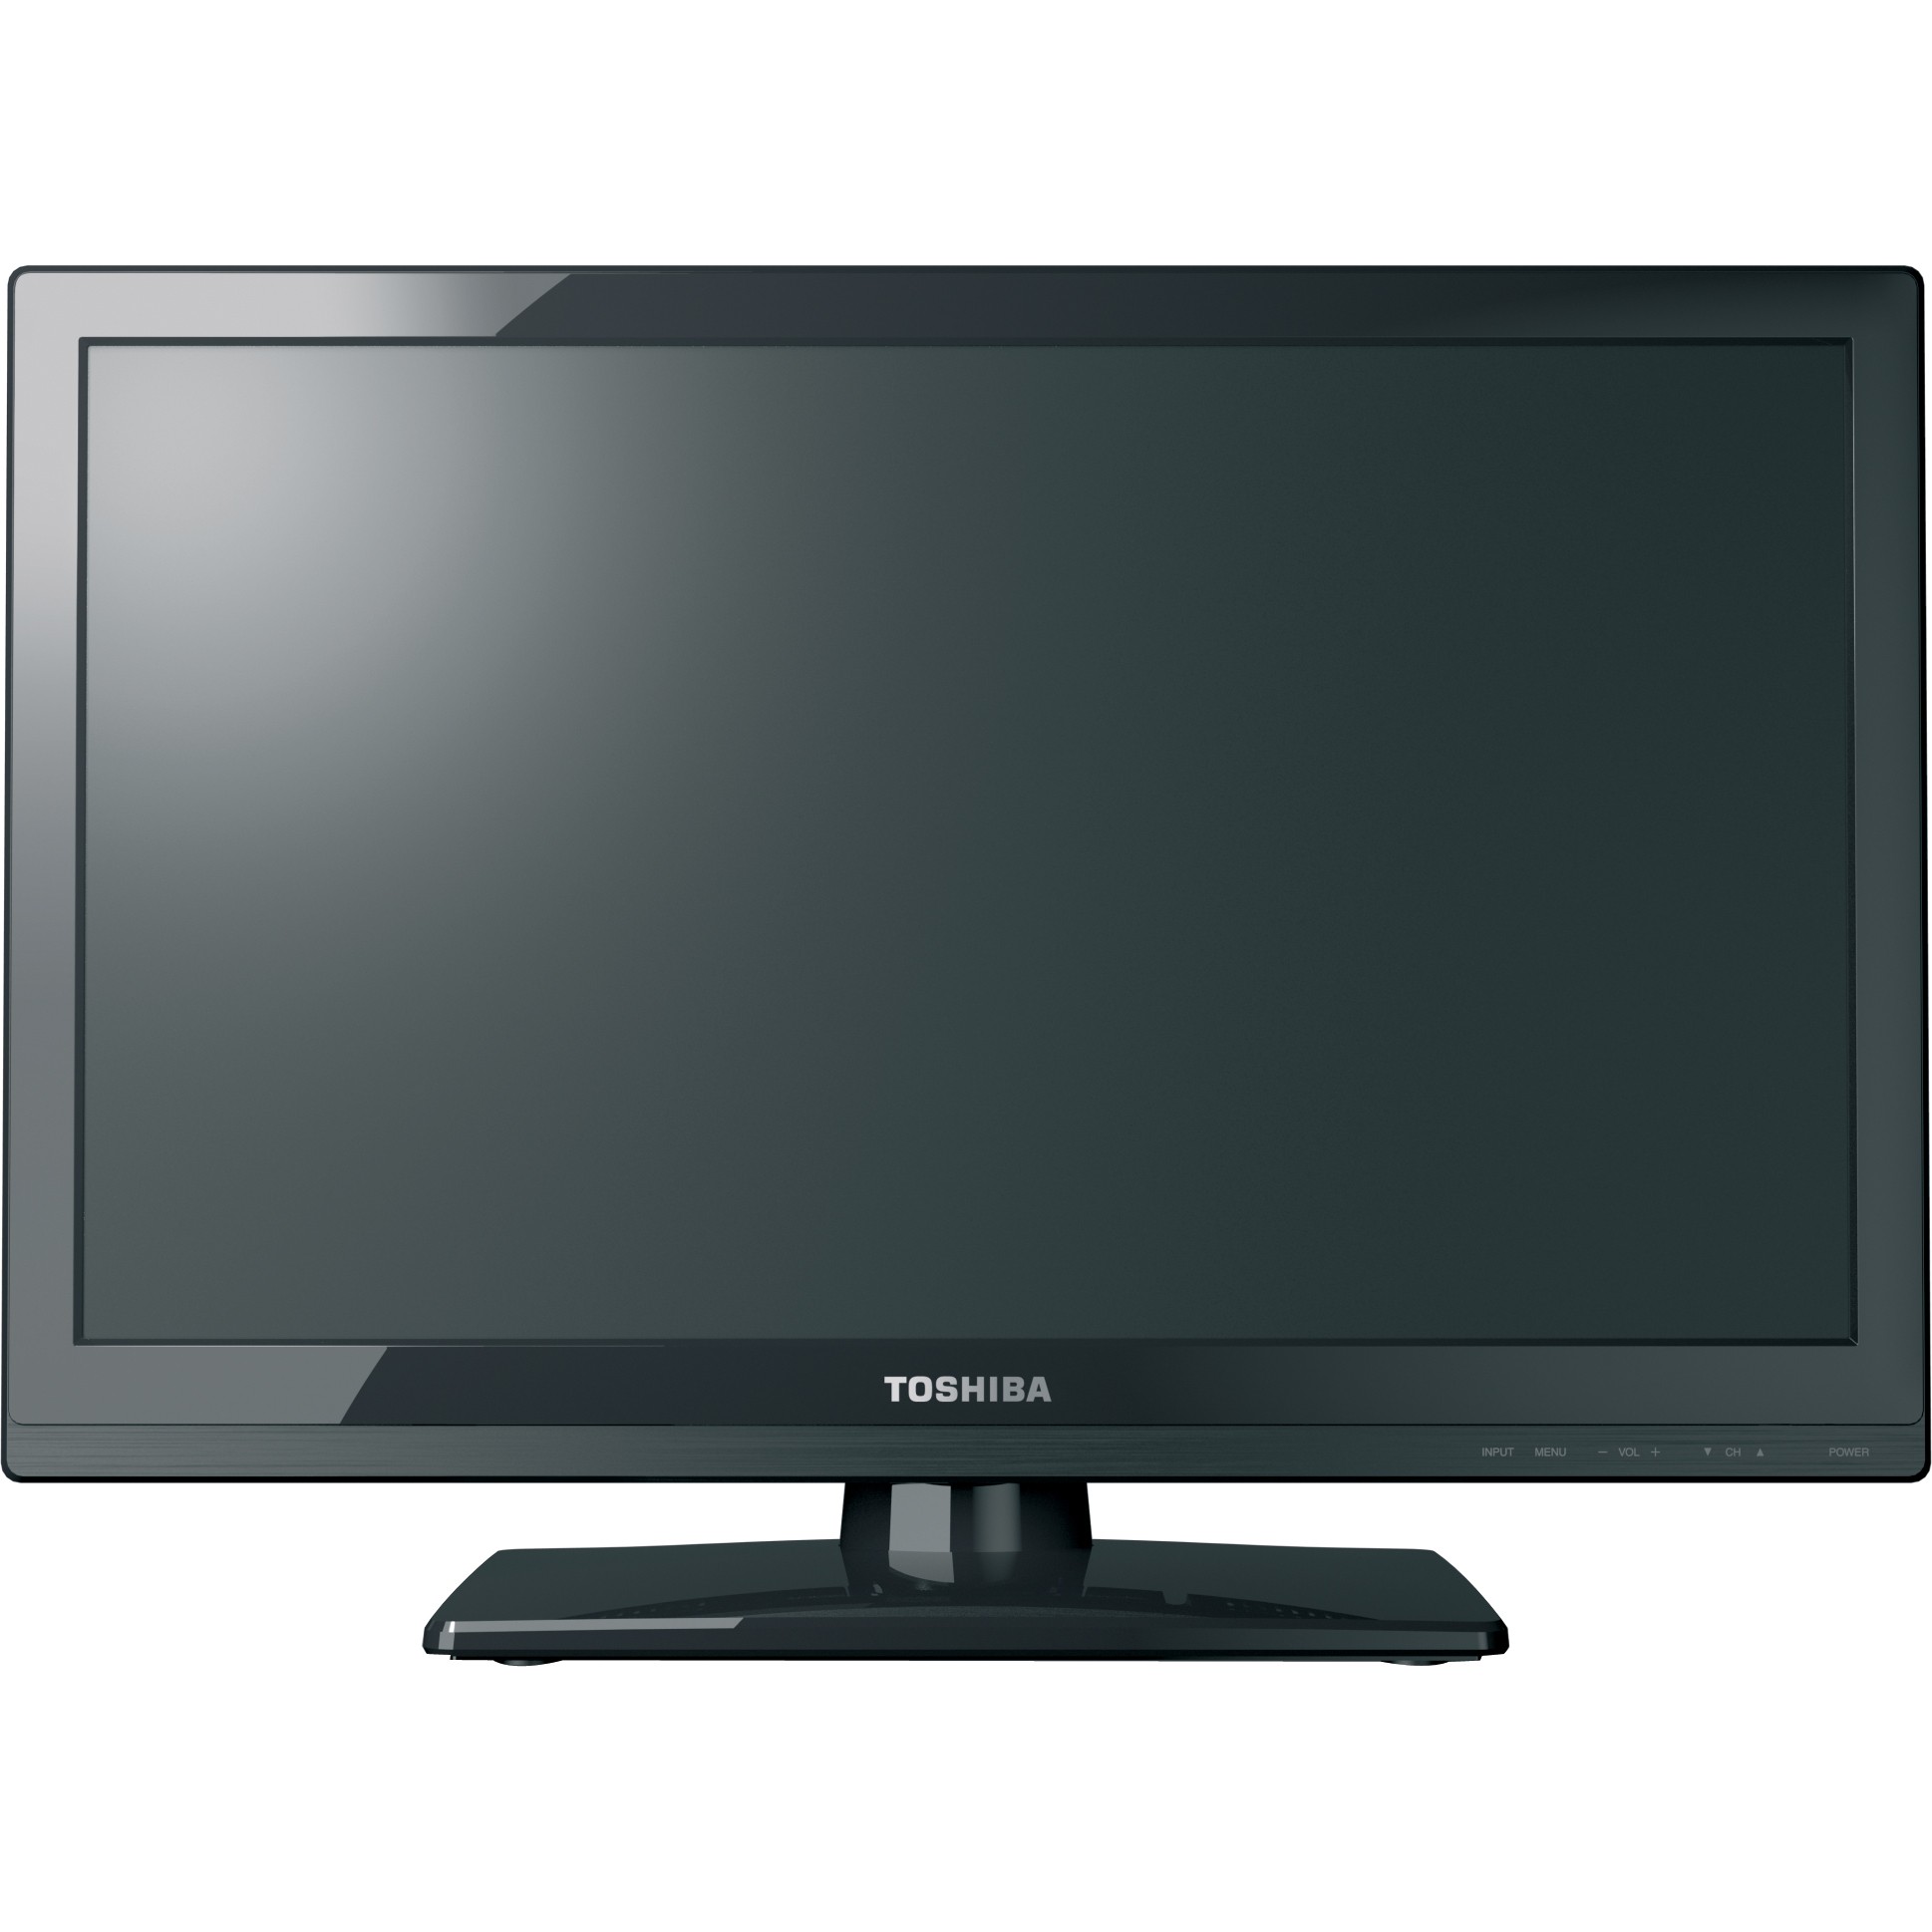 Best Buy: Toshiba 19" Class (19" LED-LCD TV HDTV Black 19SL410U